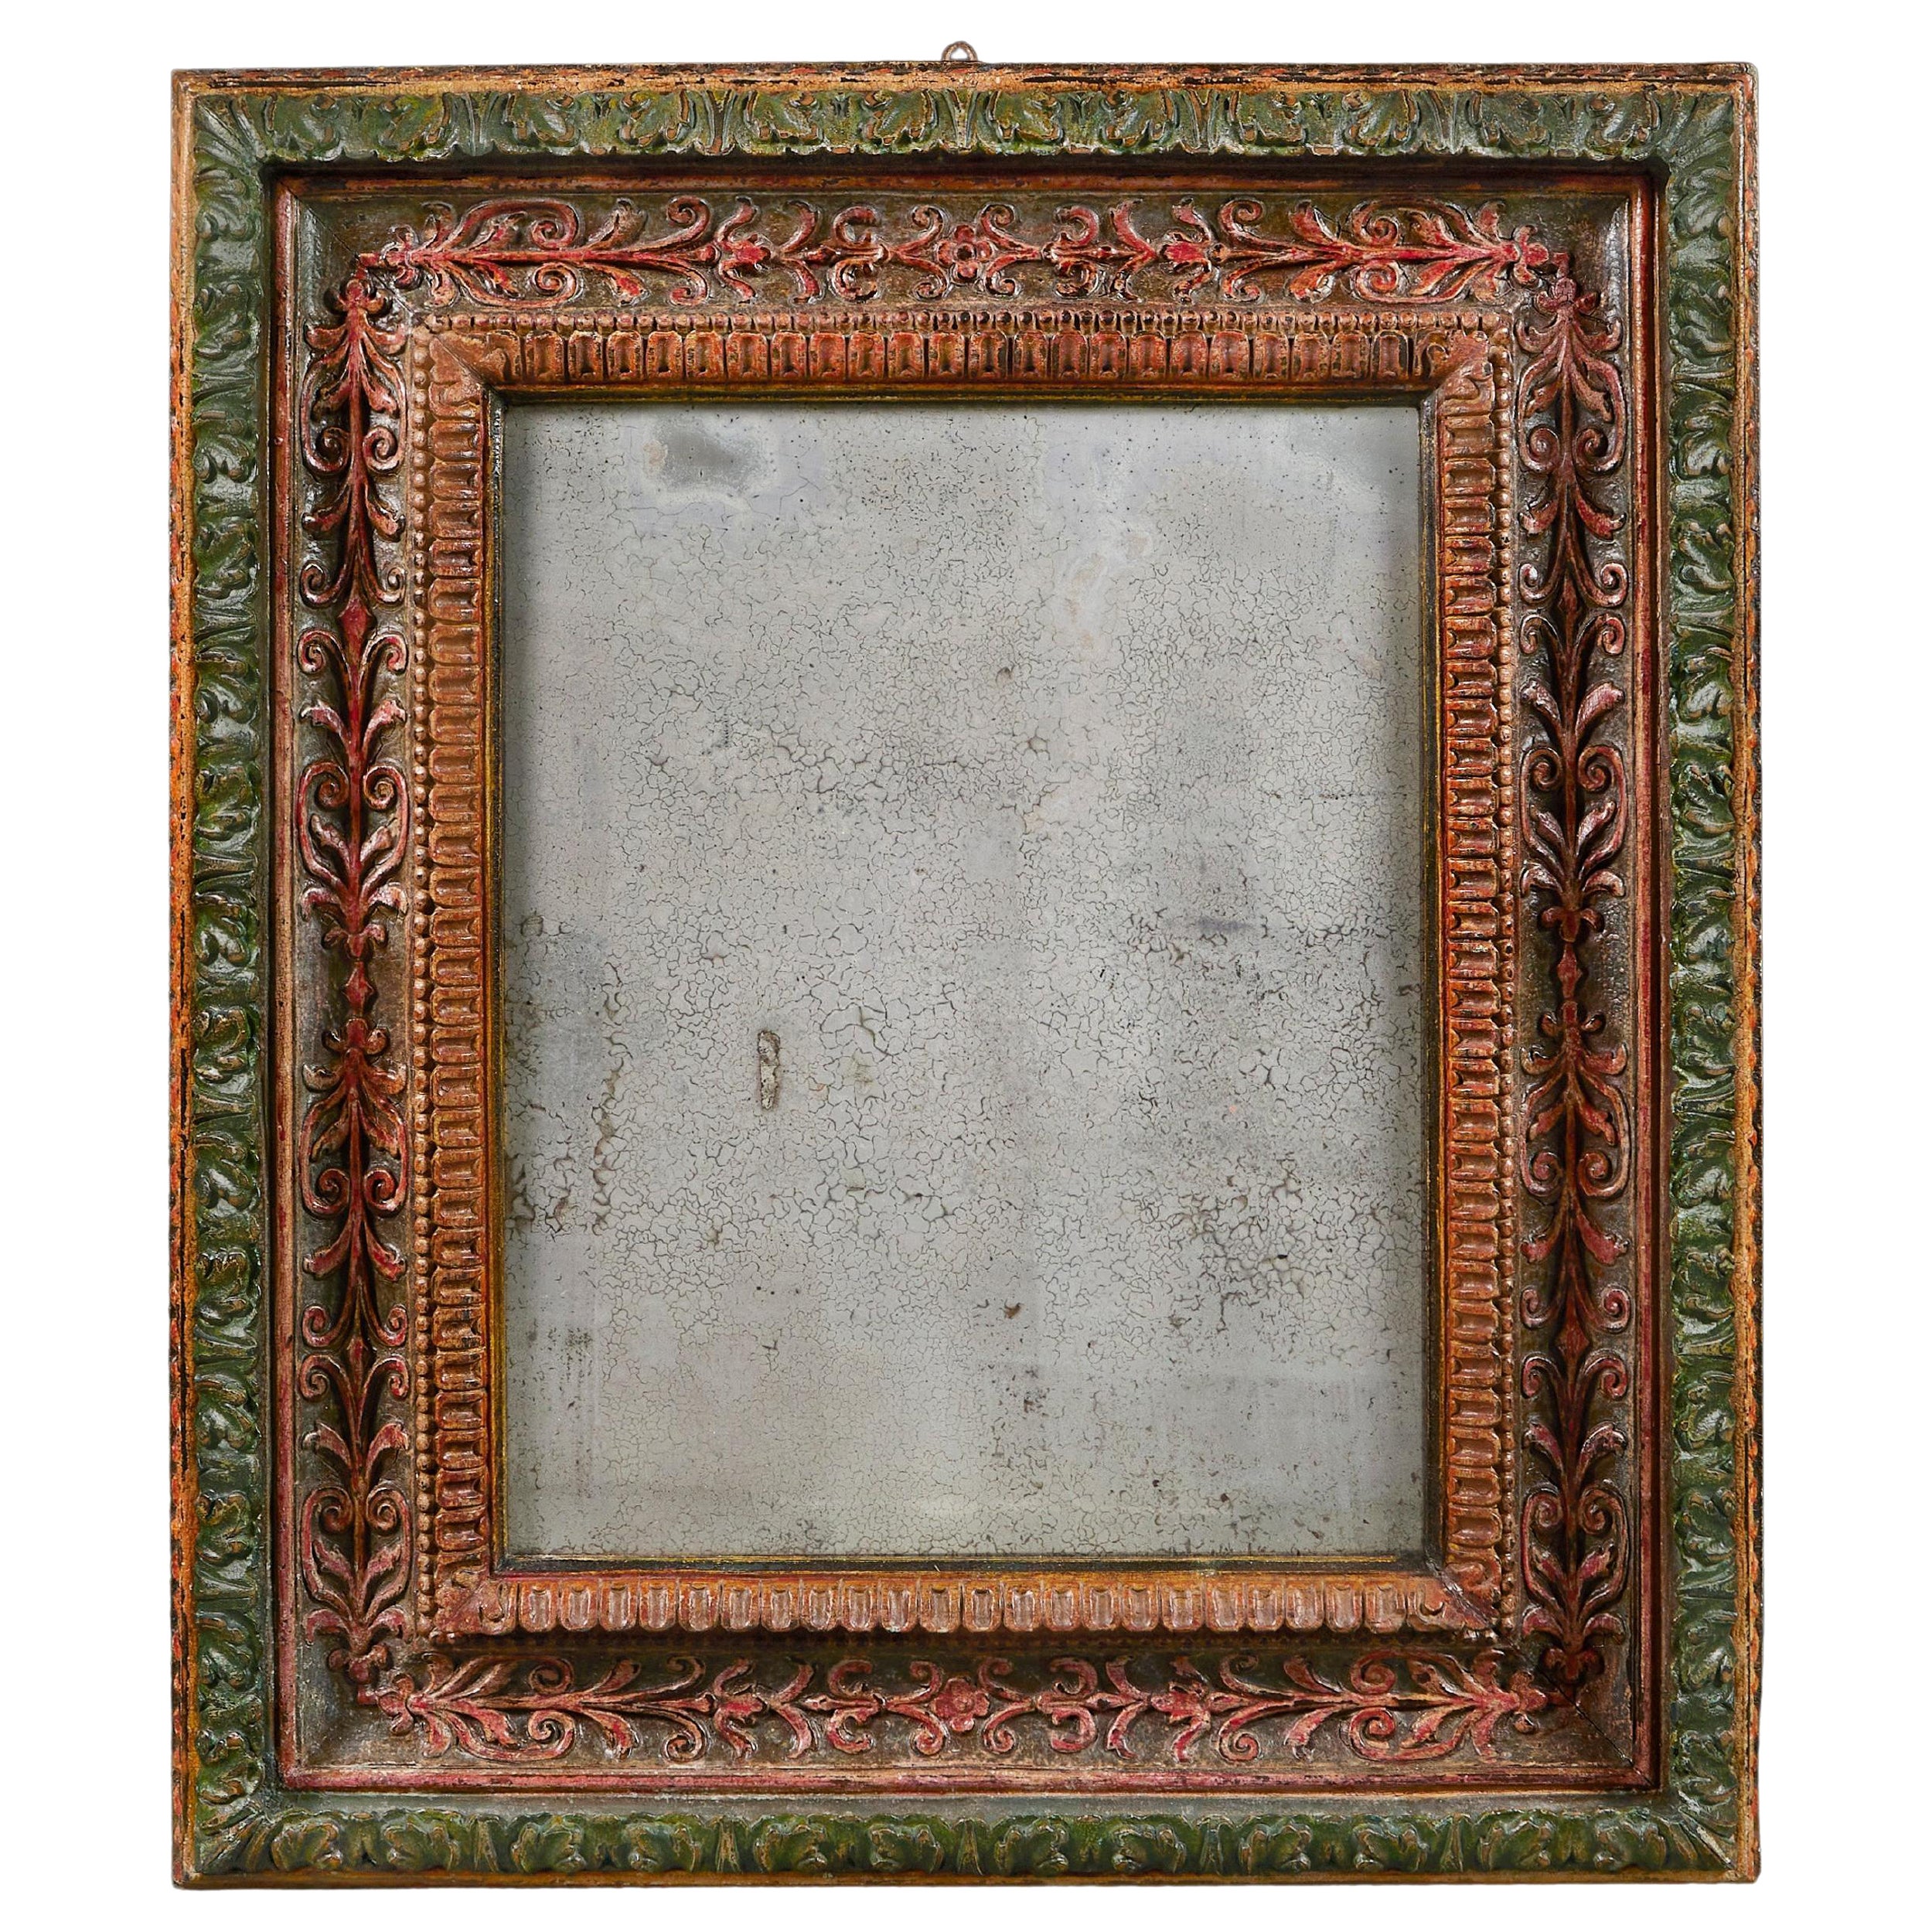 A Late 19th Century Roman Pier Mirror